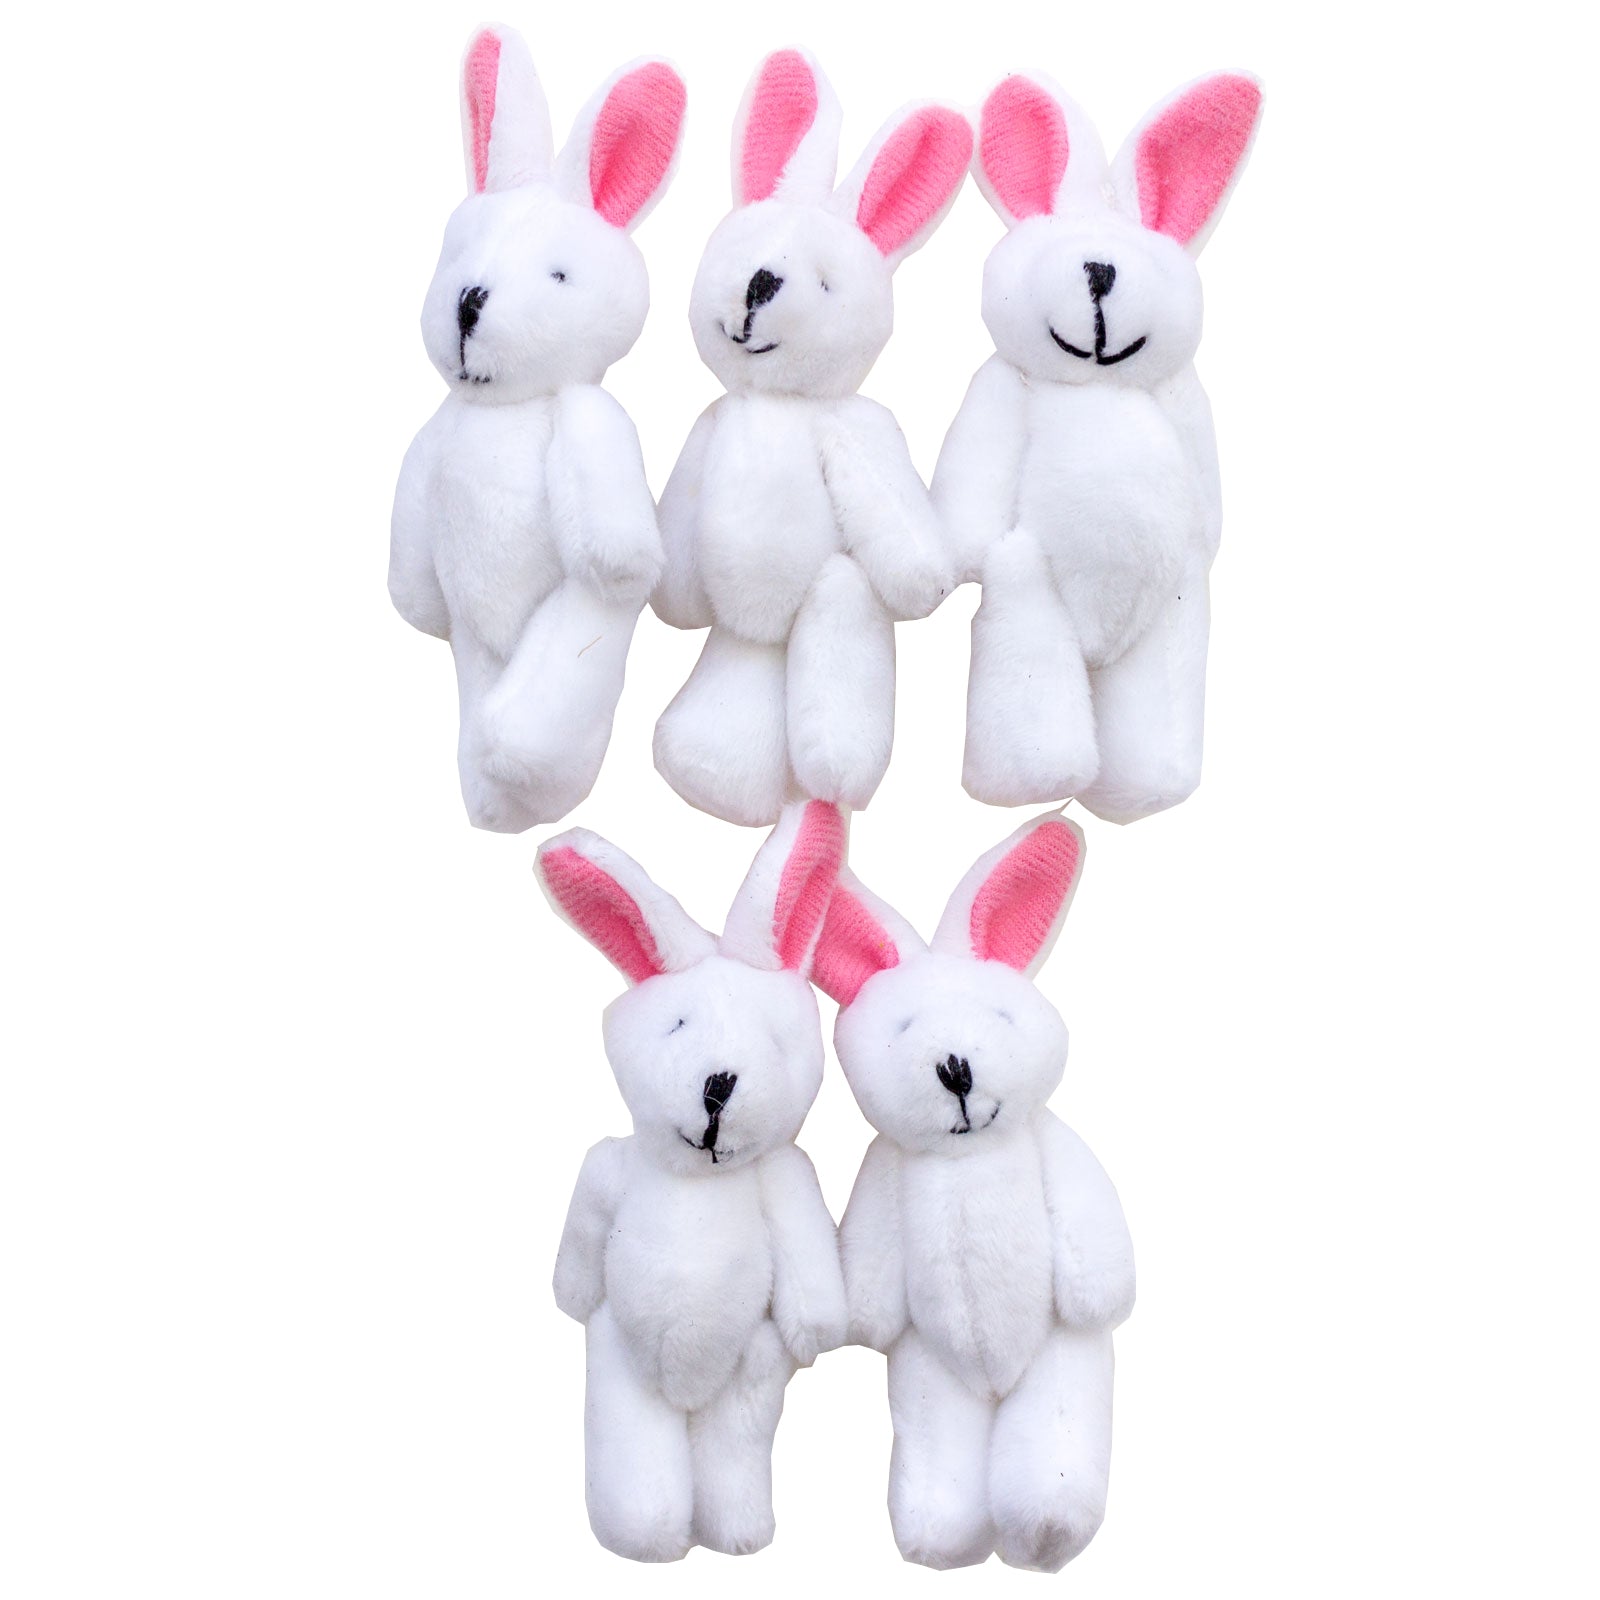 Small Rabbits X 20 - Cute Soft Adorable